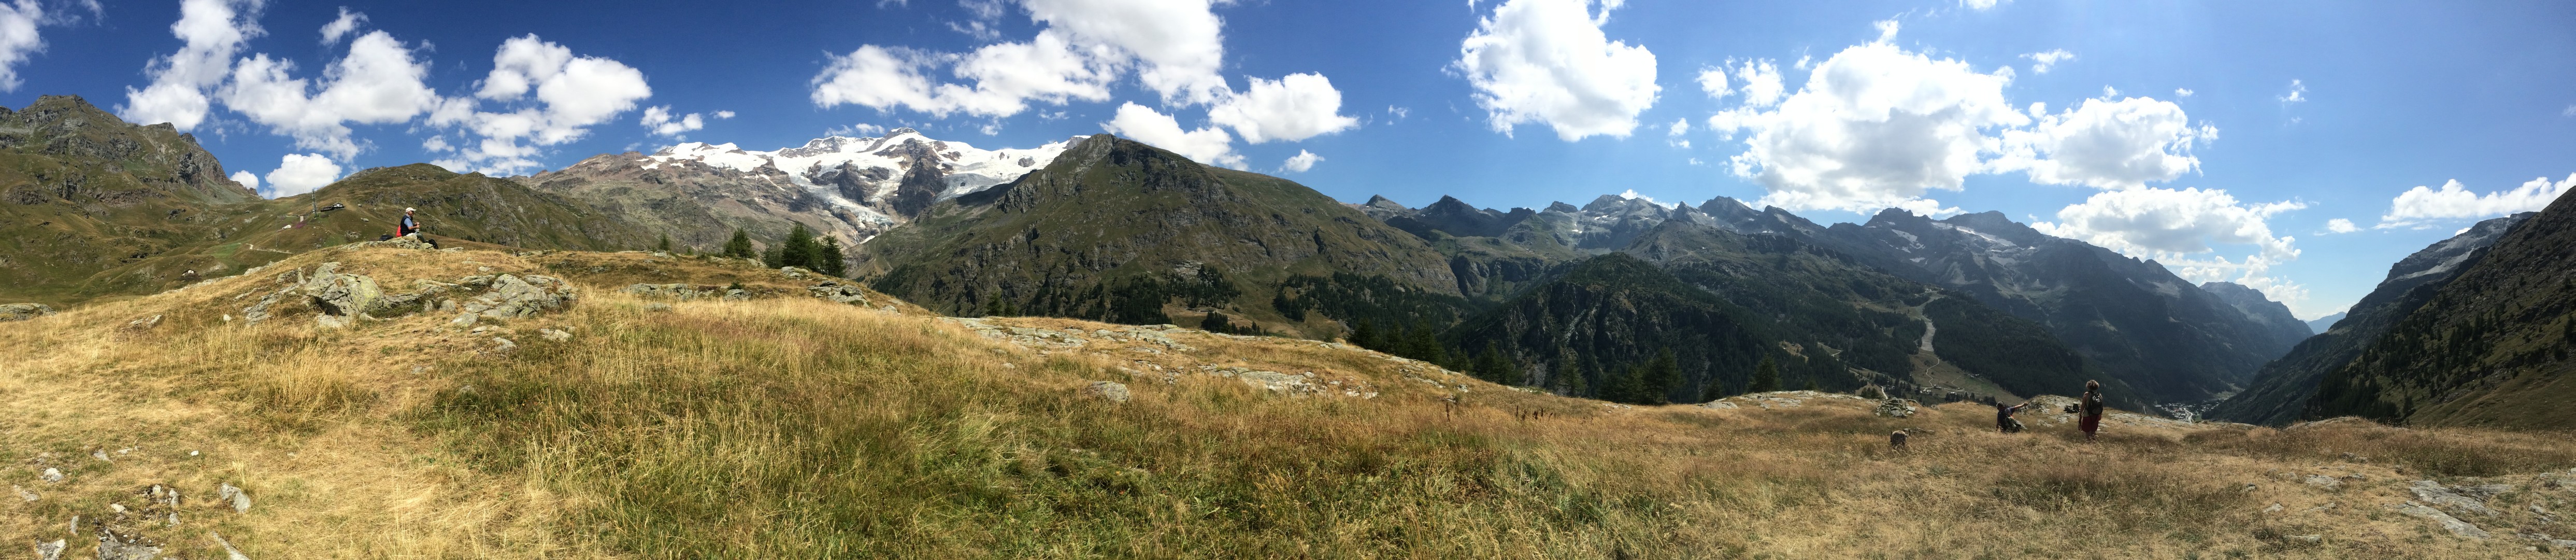 Tour de Monte Rosa - Pollux Castor Felikhorn Colle Betta panorama